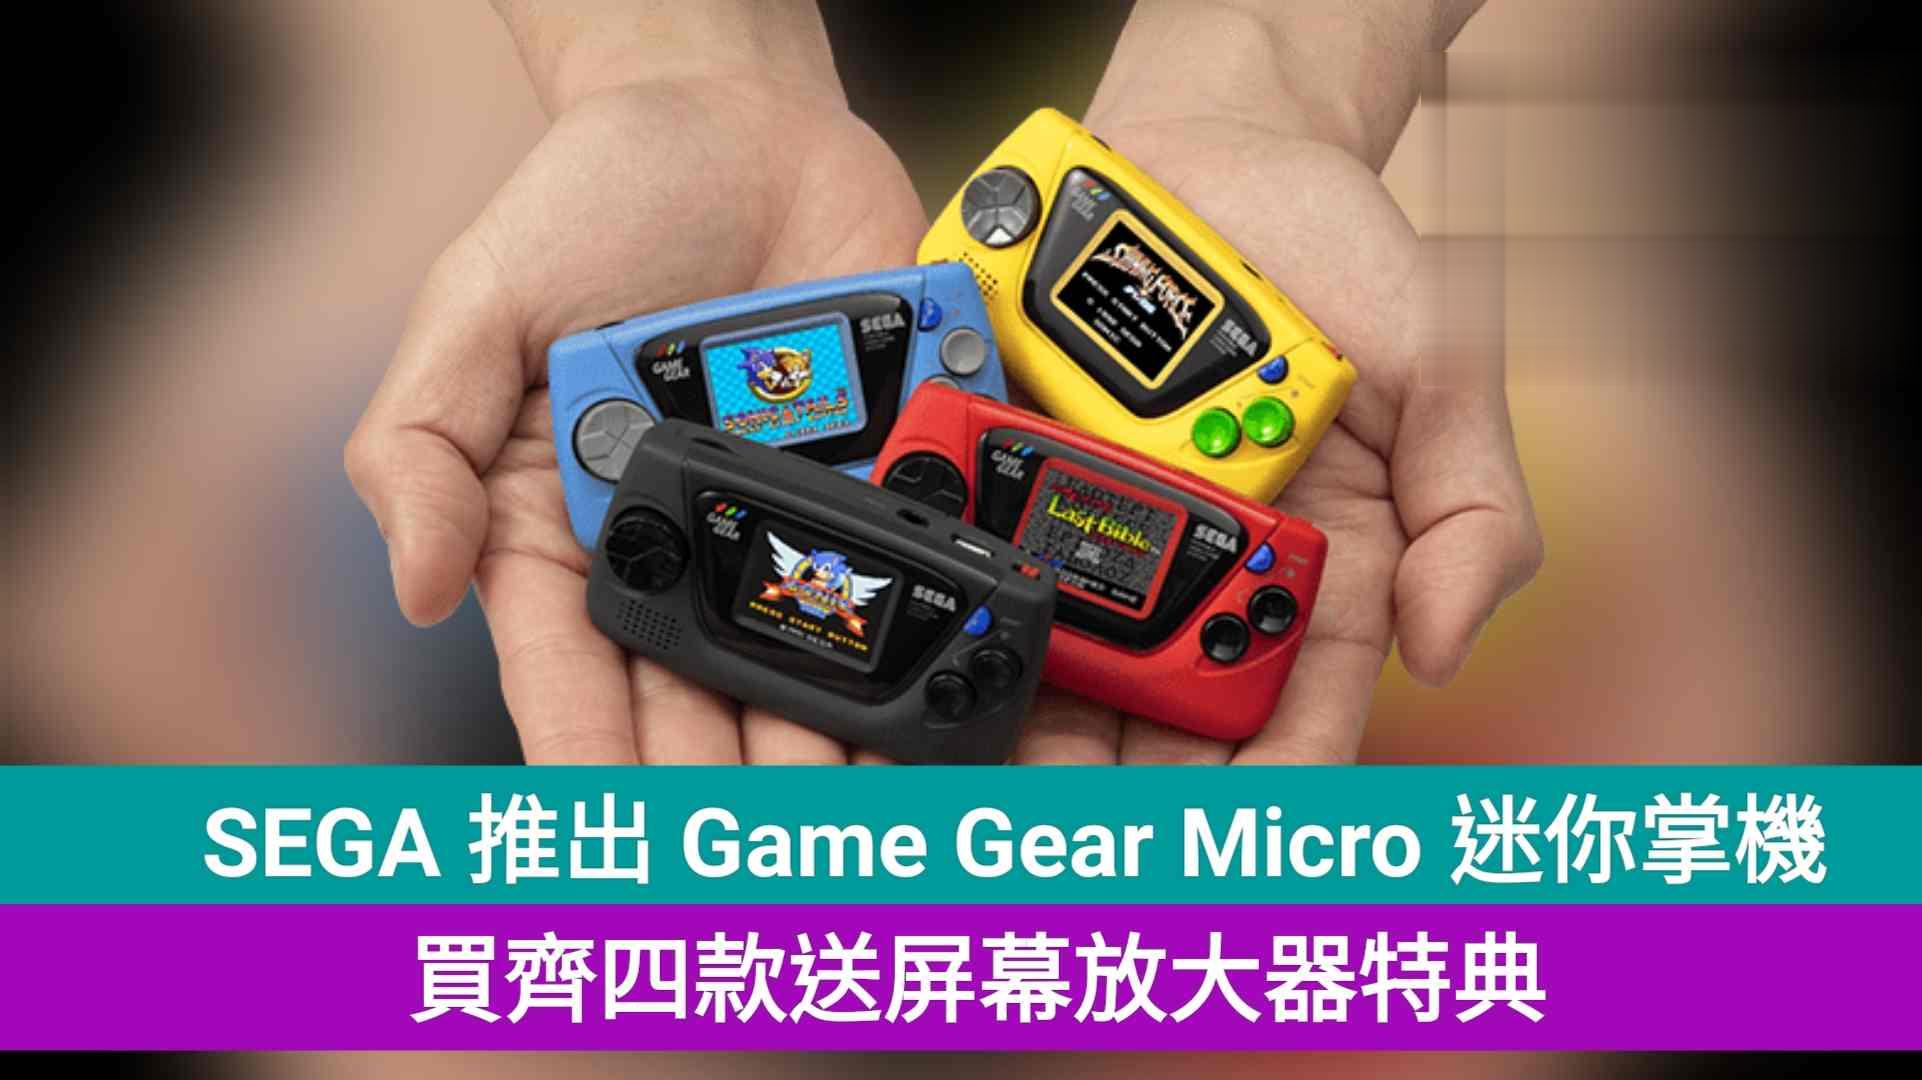 SEGA 纪念 60 週年，推出四款 Game Gear Micro 迷你复刻掌机！